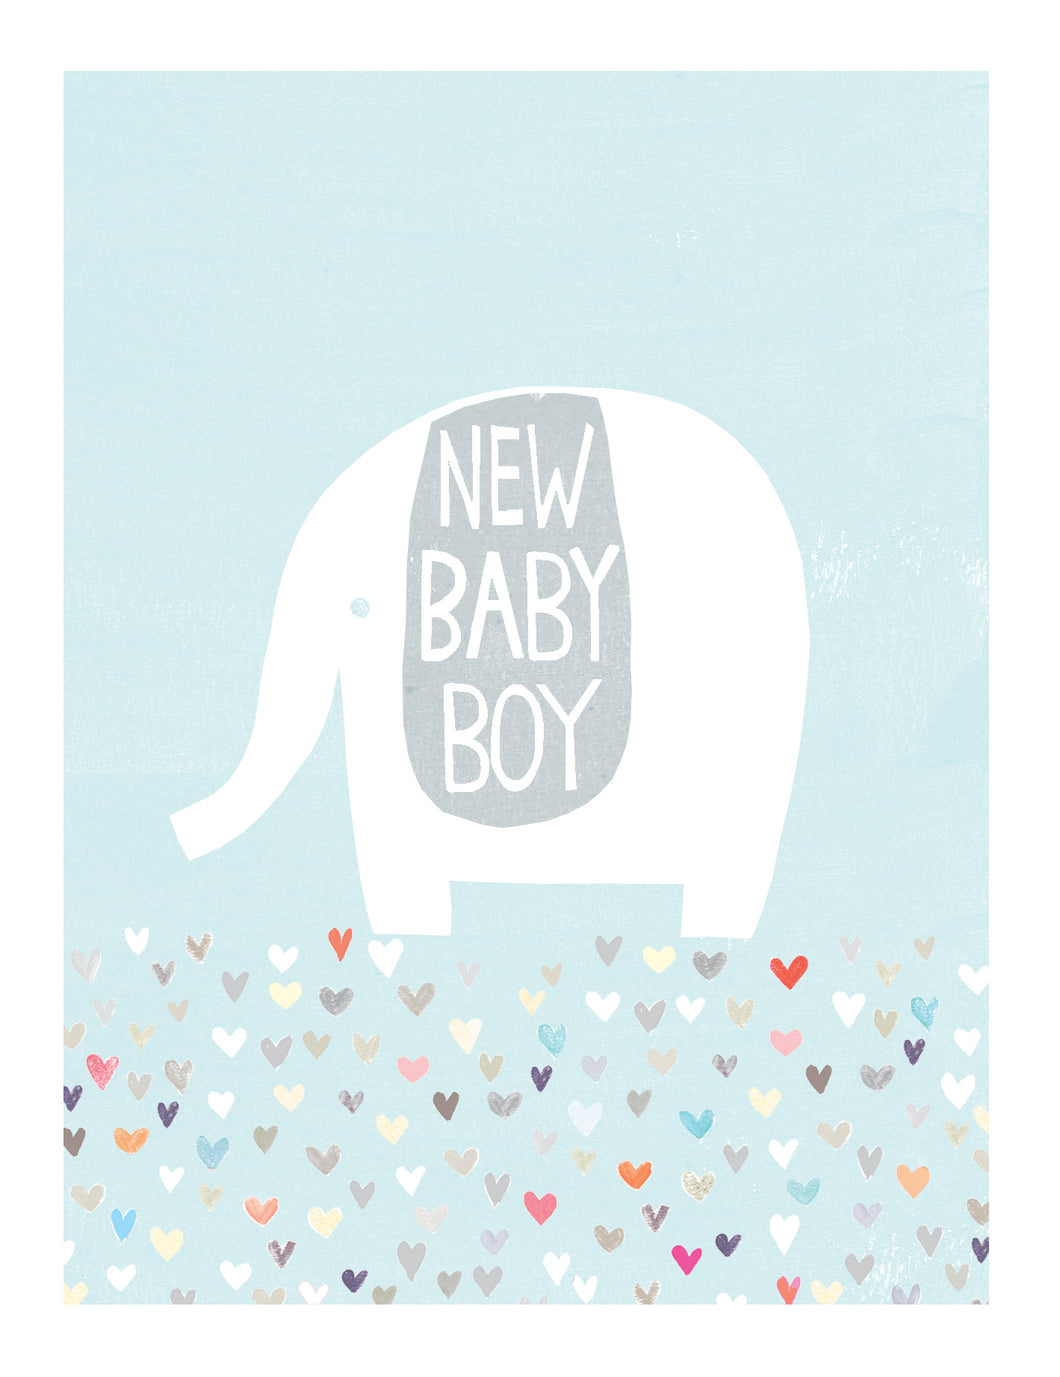 Baby boy - The Alresford Gift Shop